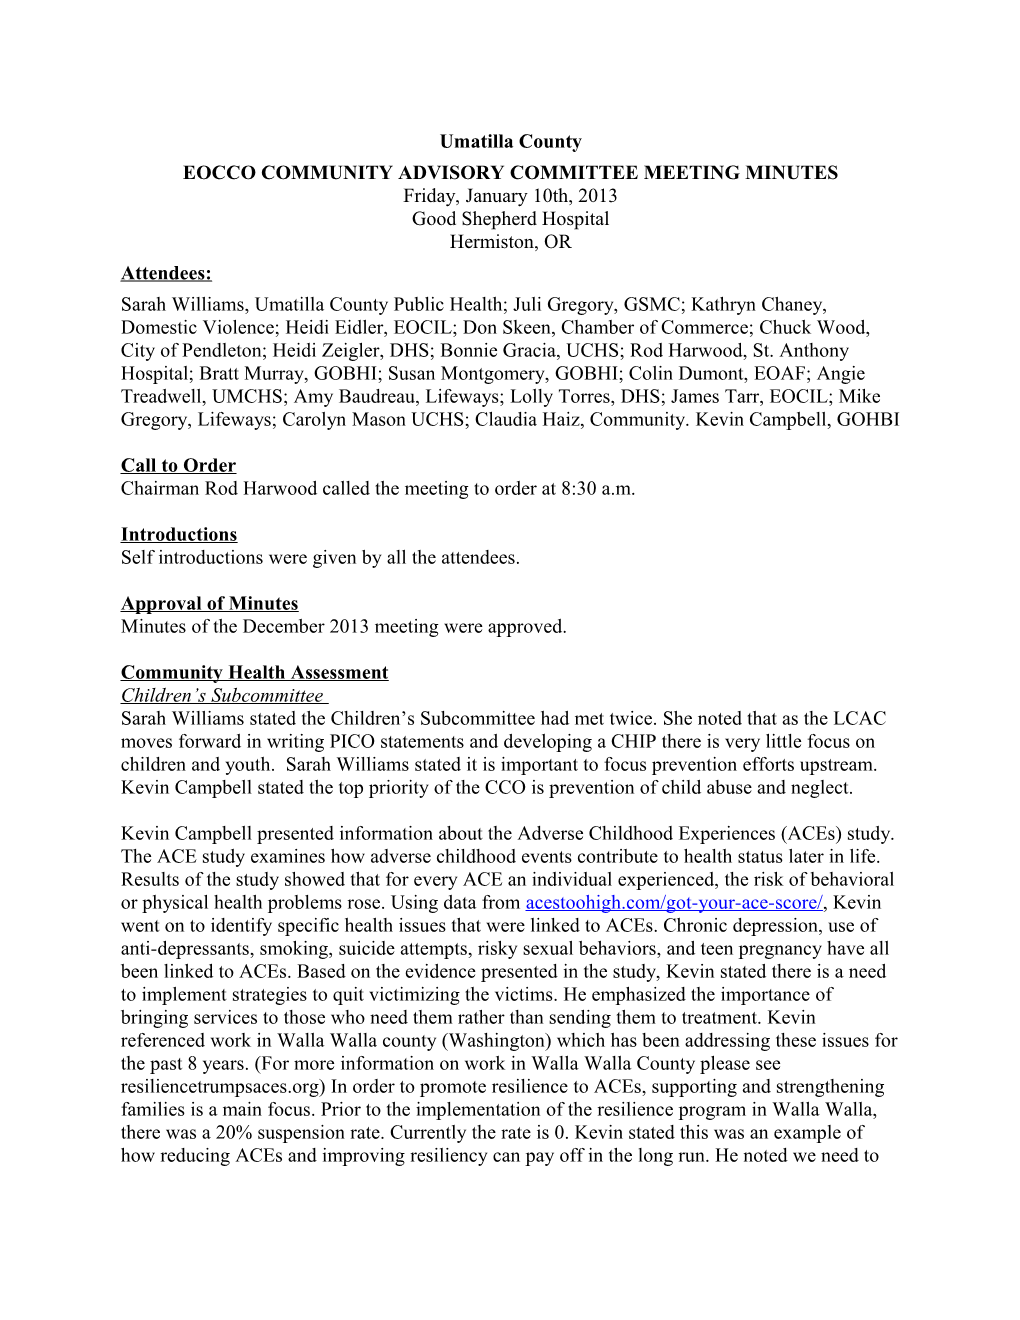 Eocco Community Advisory Committee Meeting Minutes